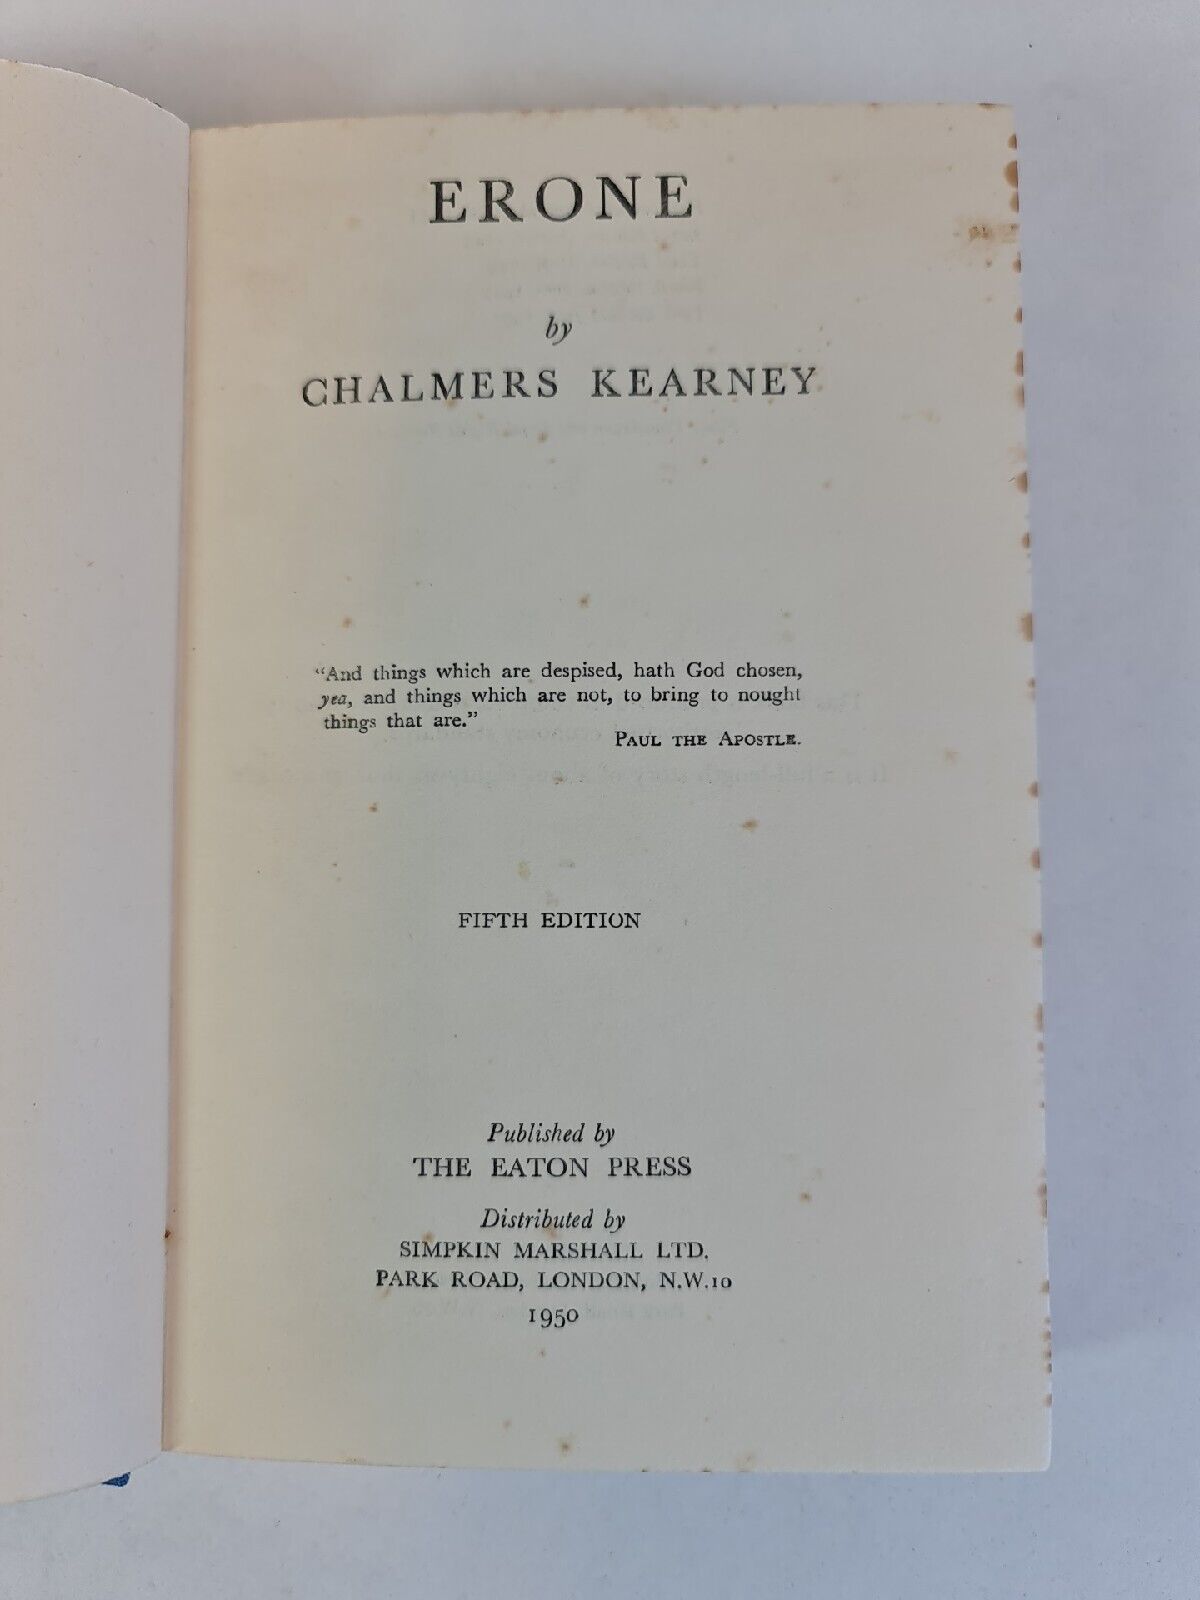 Erone by Chalmers Kearney (1950)